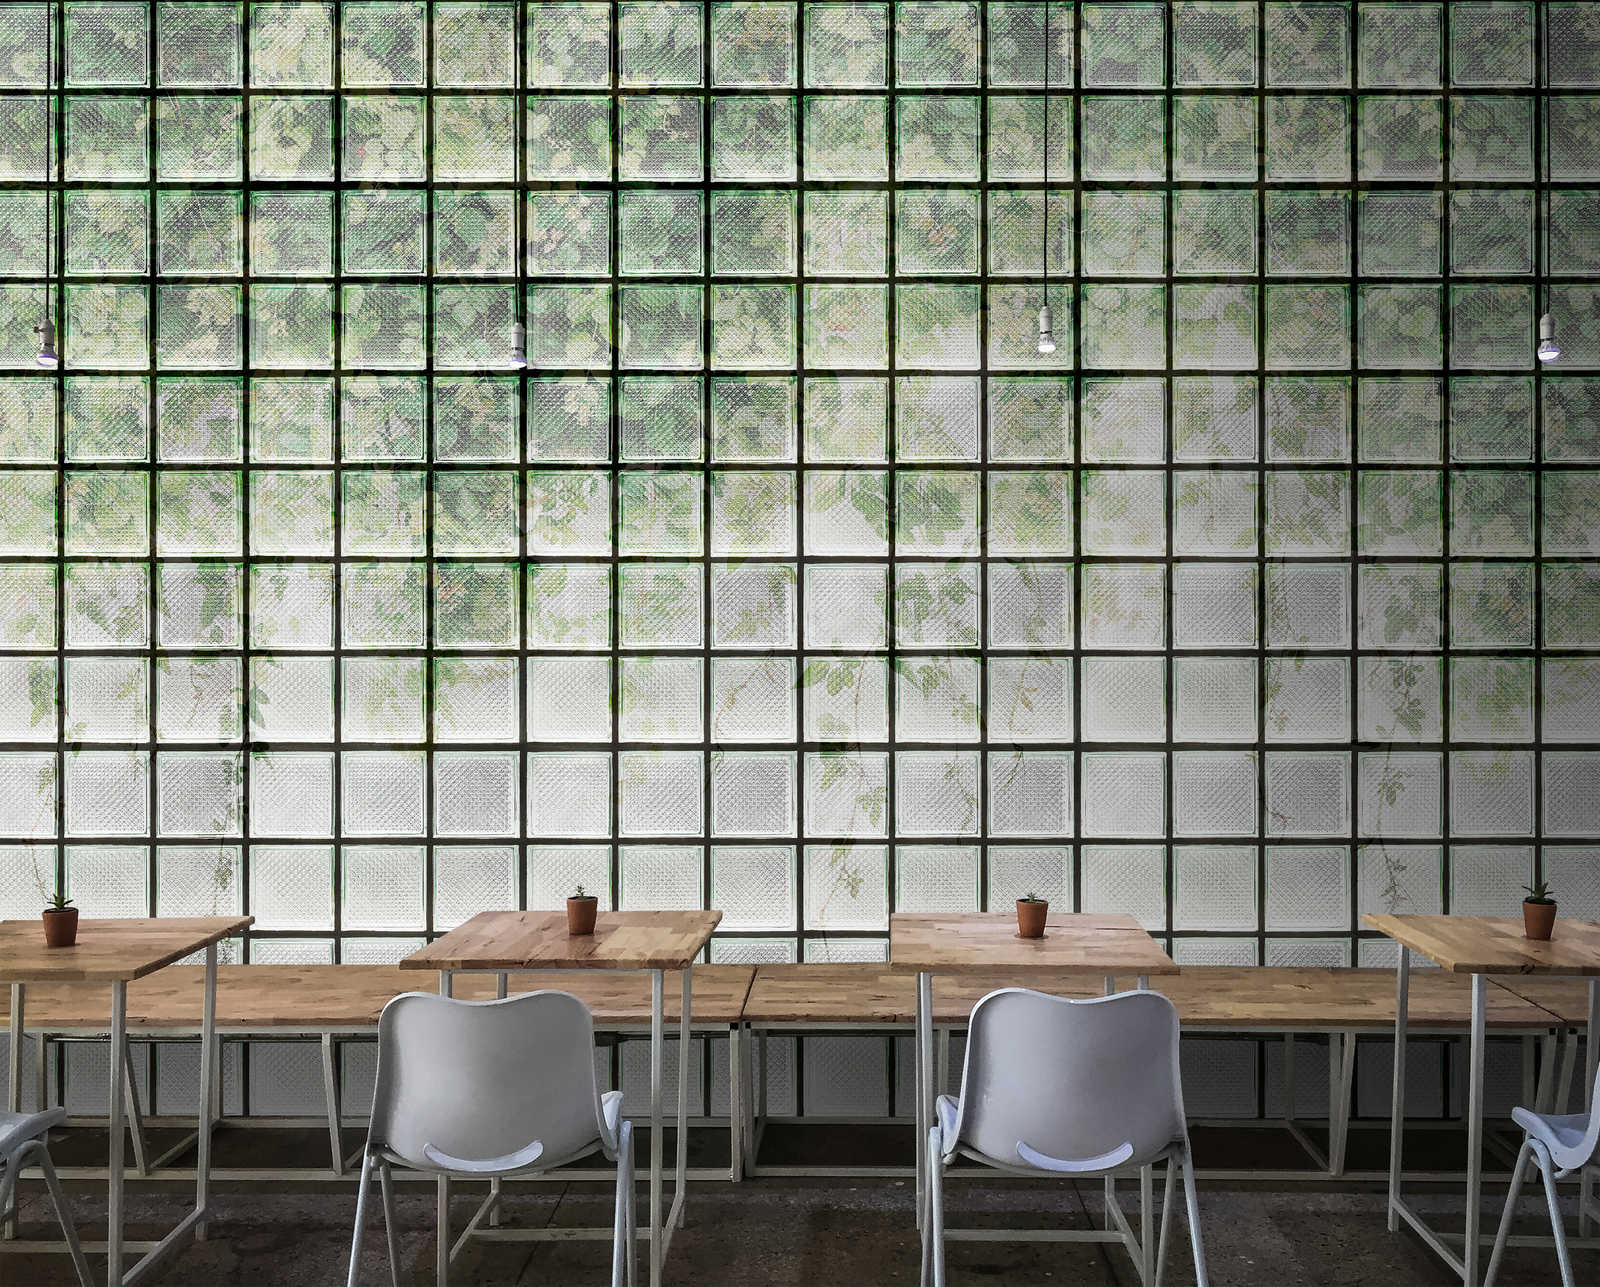             Green House 2 - Greenhouse photo wallpaper leaves & glass blocks
        